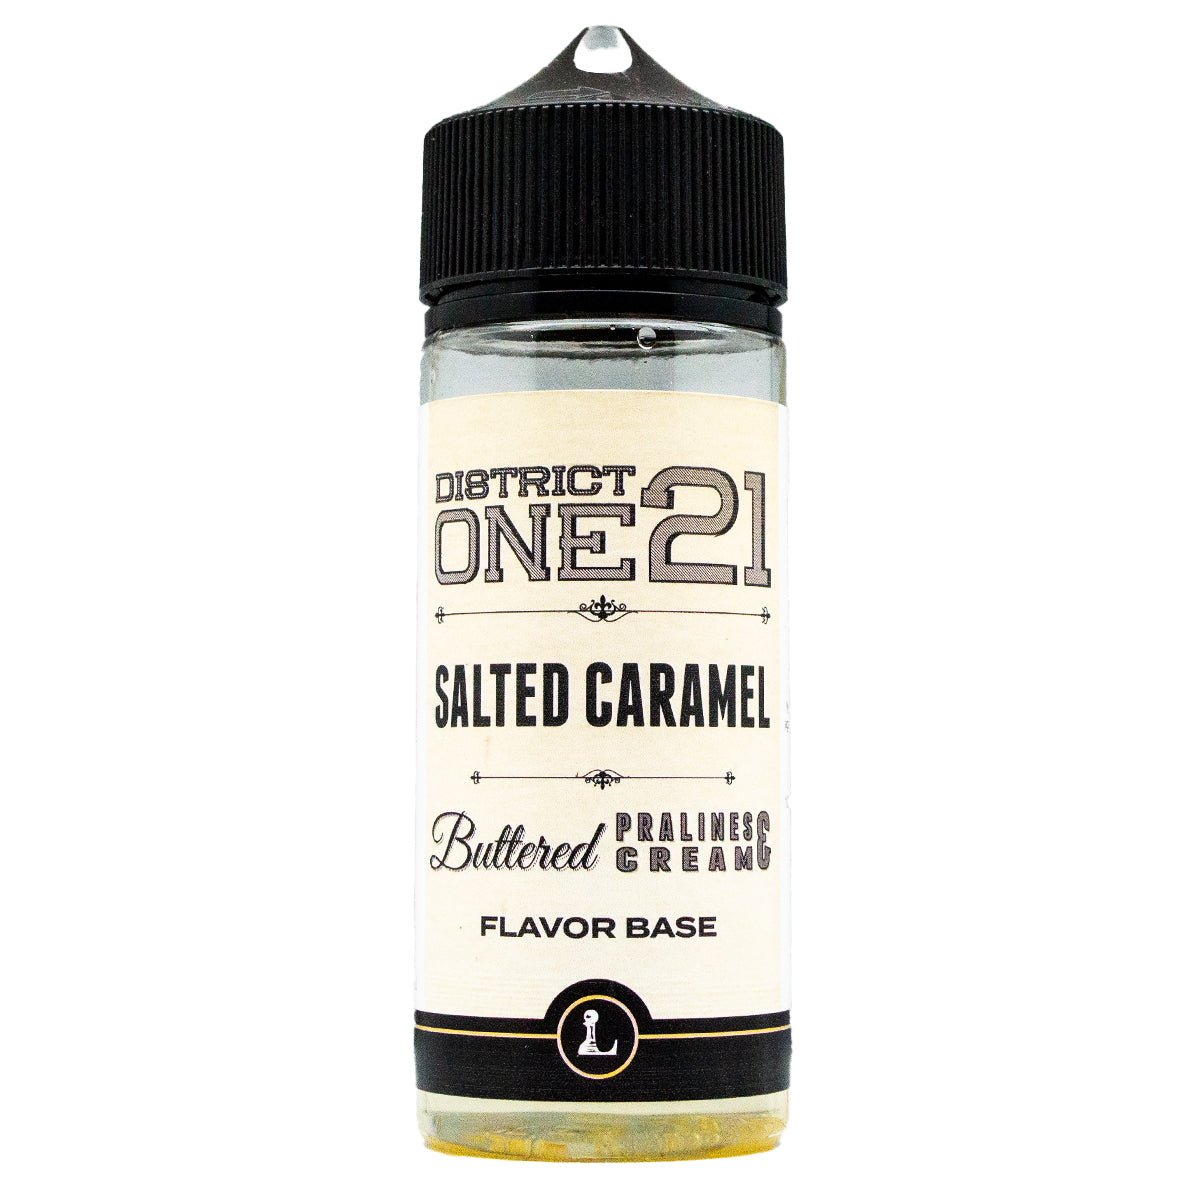 Salted Caramel 100ml Shortfill By Five Pawns Legacy - District One21 Range - Manabush Eliquid - Tobacco E-liquid and Vape Juice